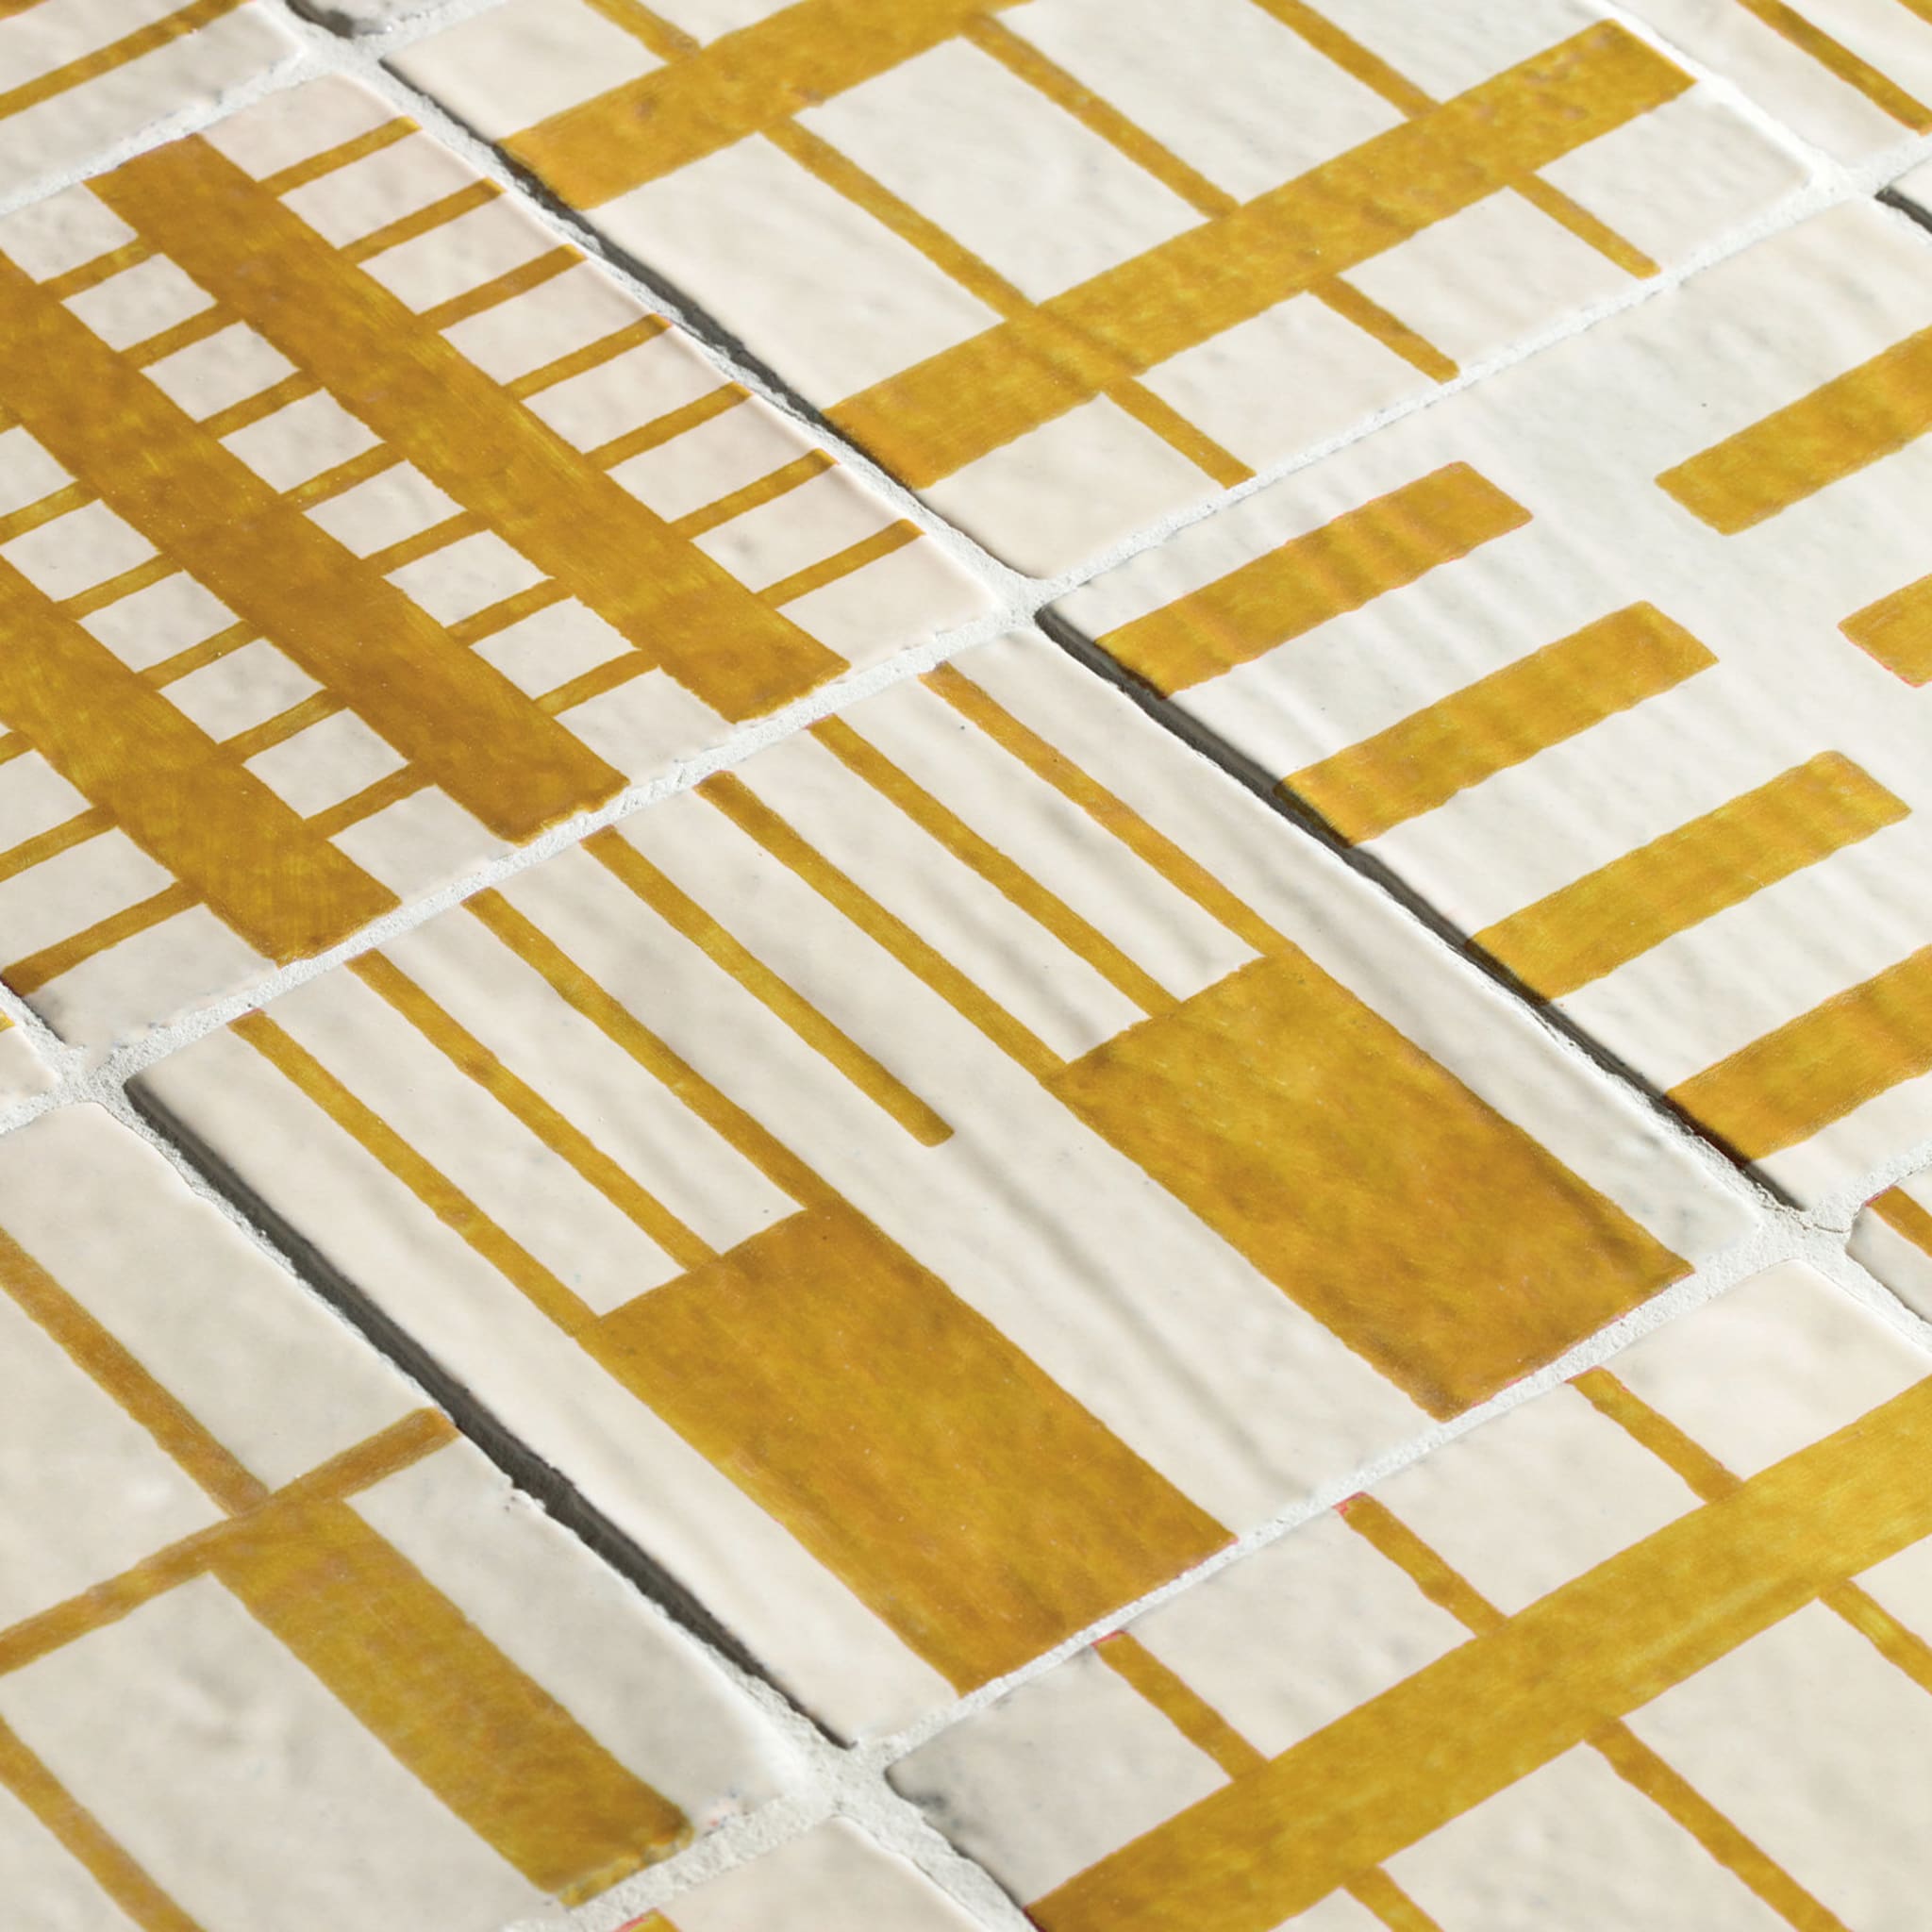 Alfabeto Set of 44 White and Yellow Tiles by Margherita Rui - Alternative view 1